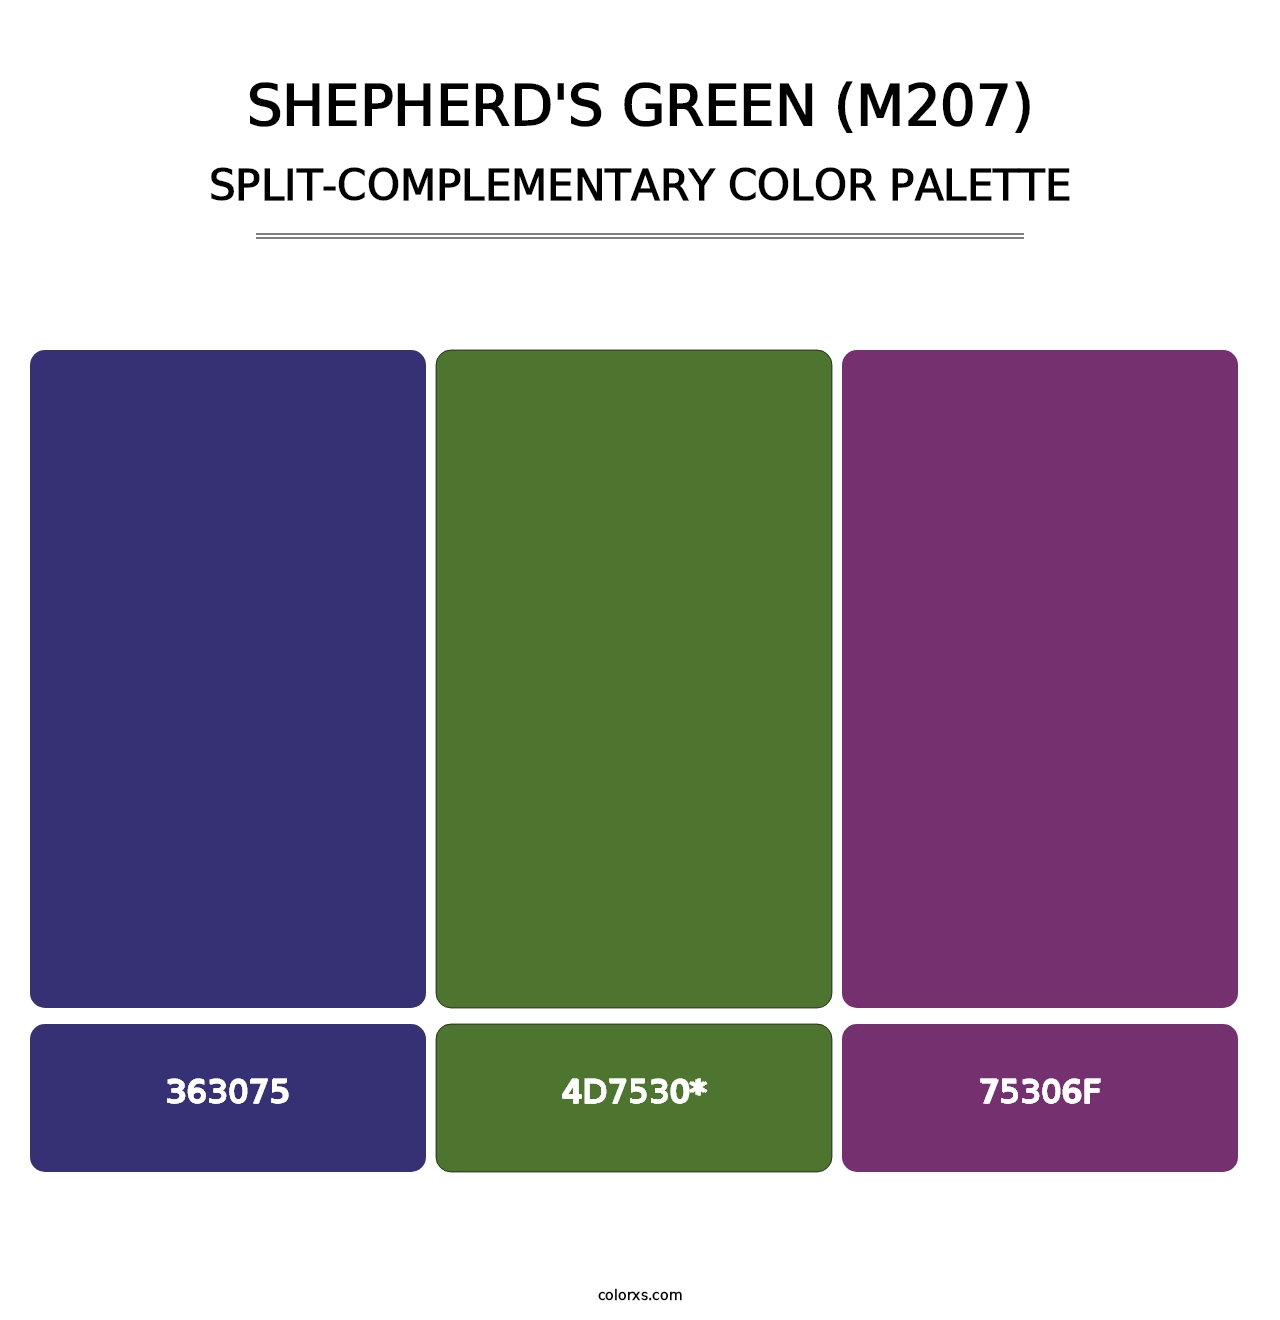 Shepherd's Green (M207) - Split-Complementary Color Palette